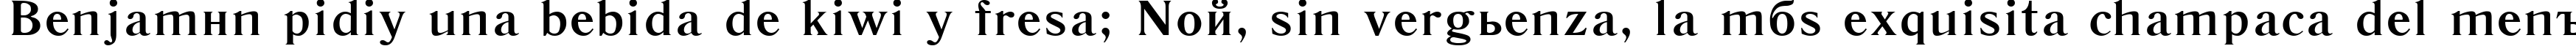 Пример написания шрифтом Literaturnaya 107B текста на испанском